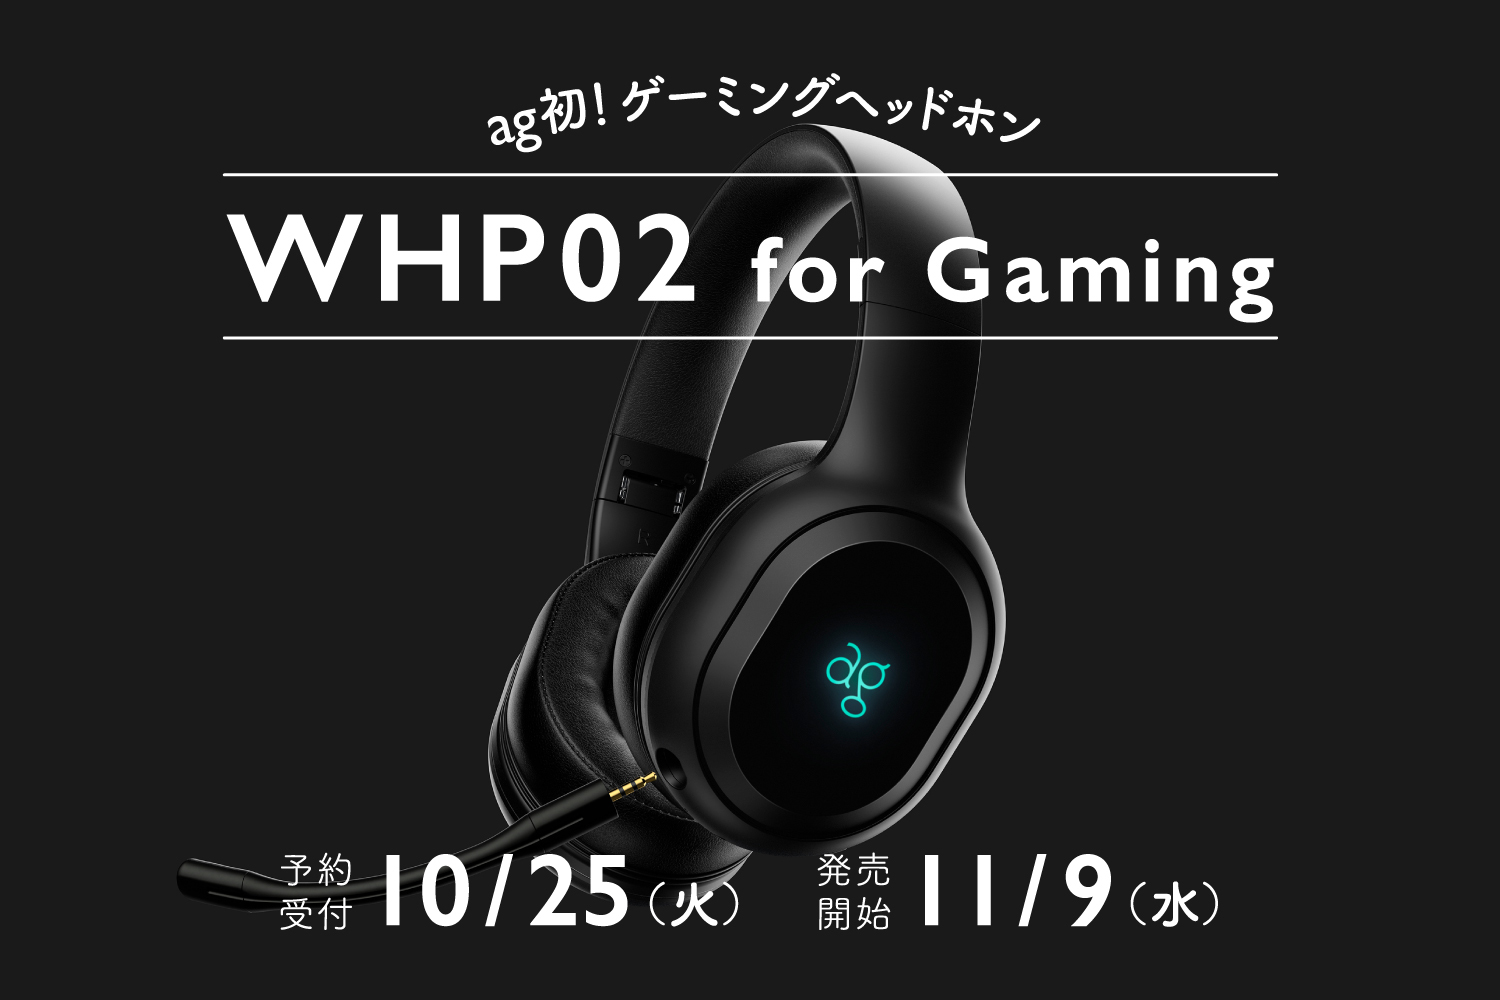 agブランド初のワイヤレスゲーミングヘッドホン　
「WHP02 for Gaming」11月9日発売